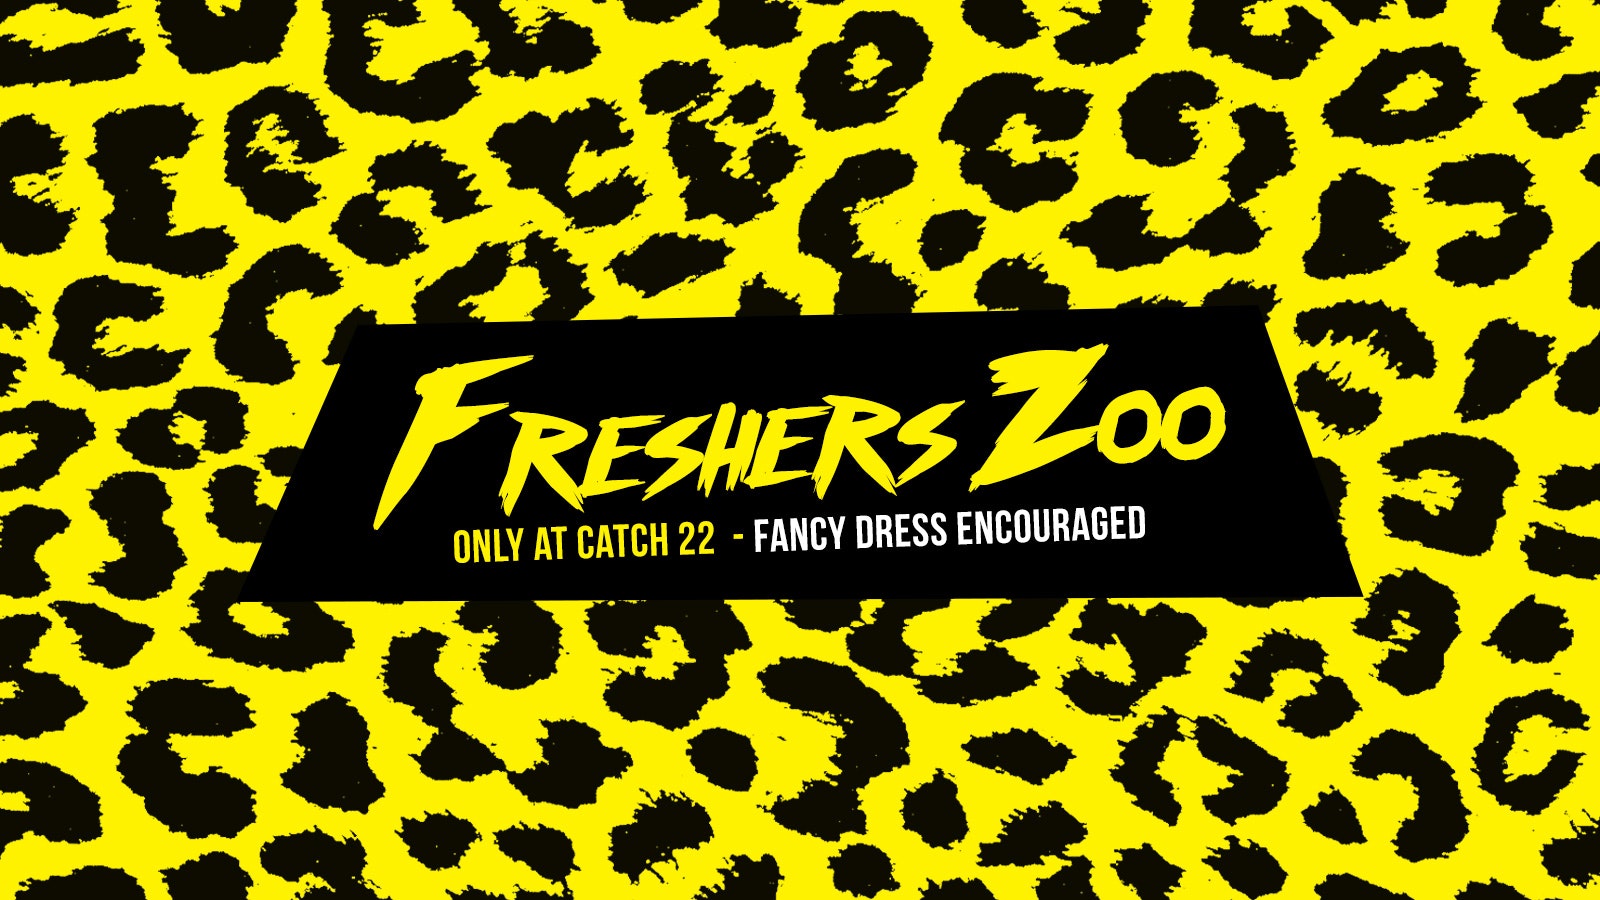 Freshers Zoo | Coventry Freshers 2019 | 2 VENUES